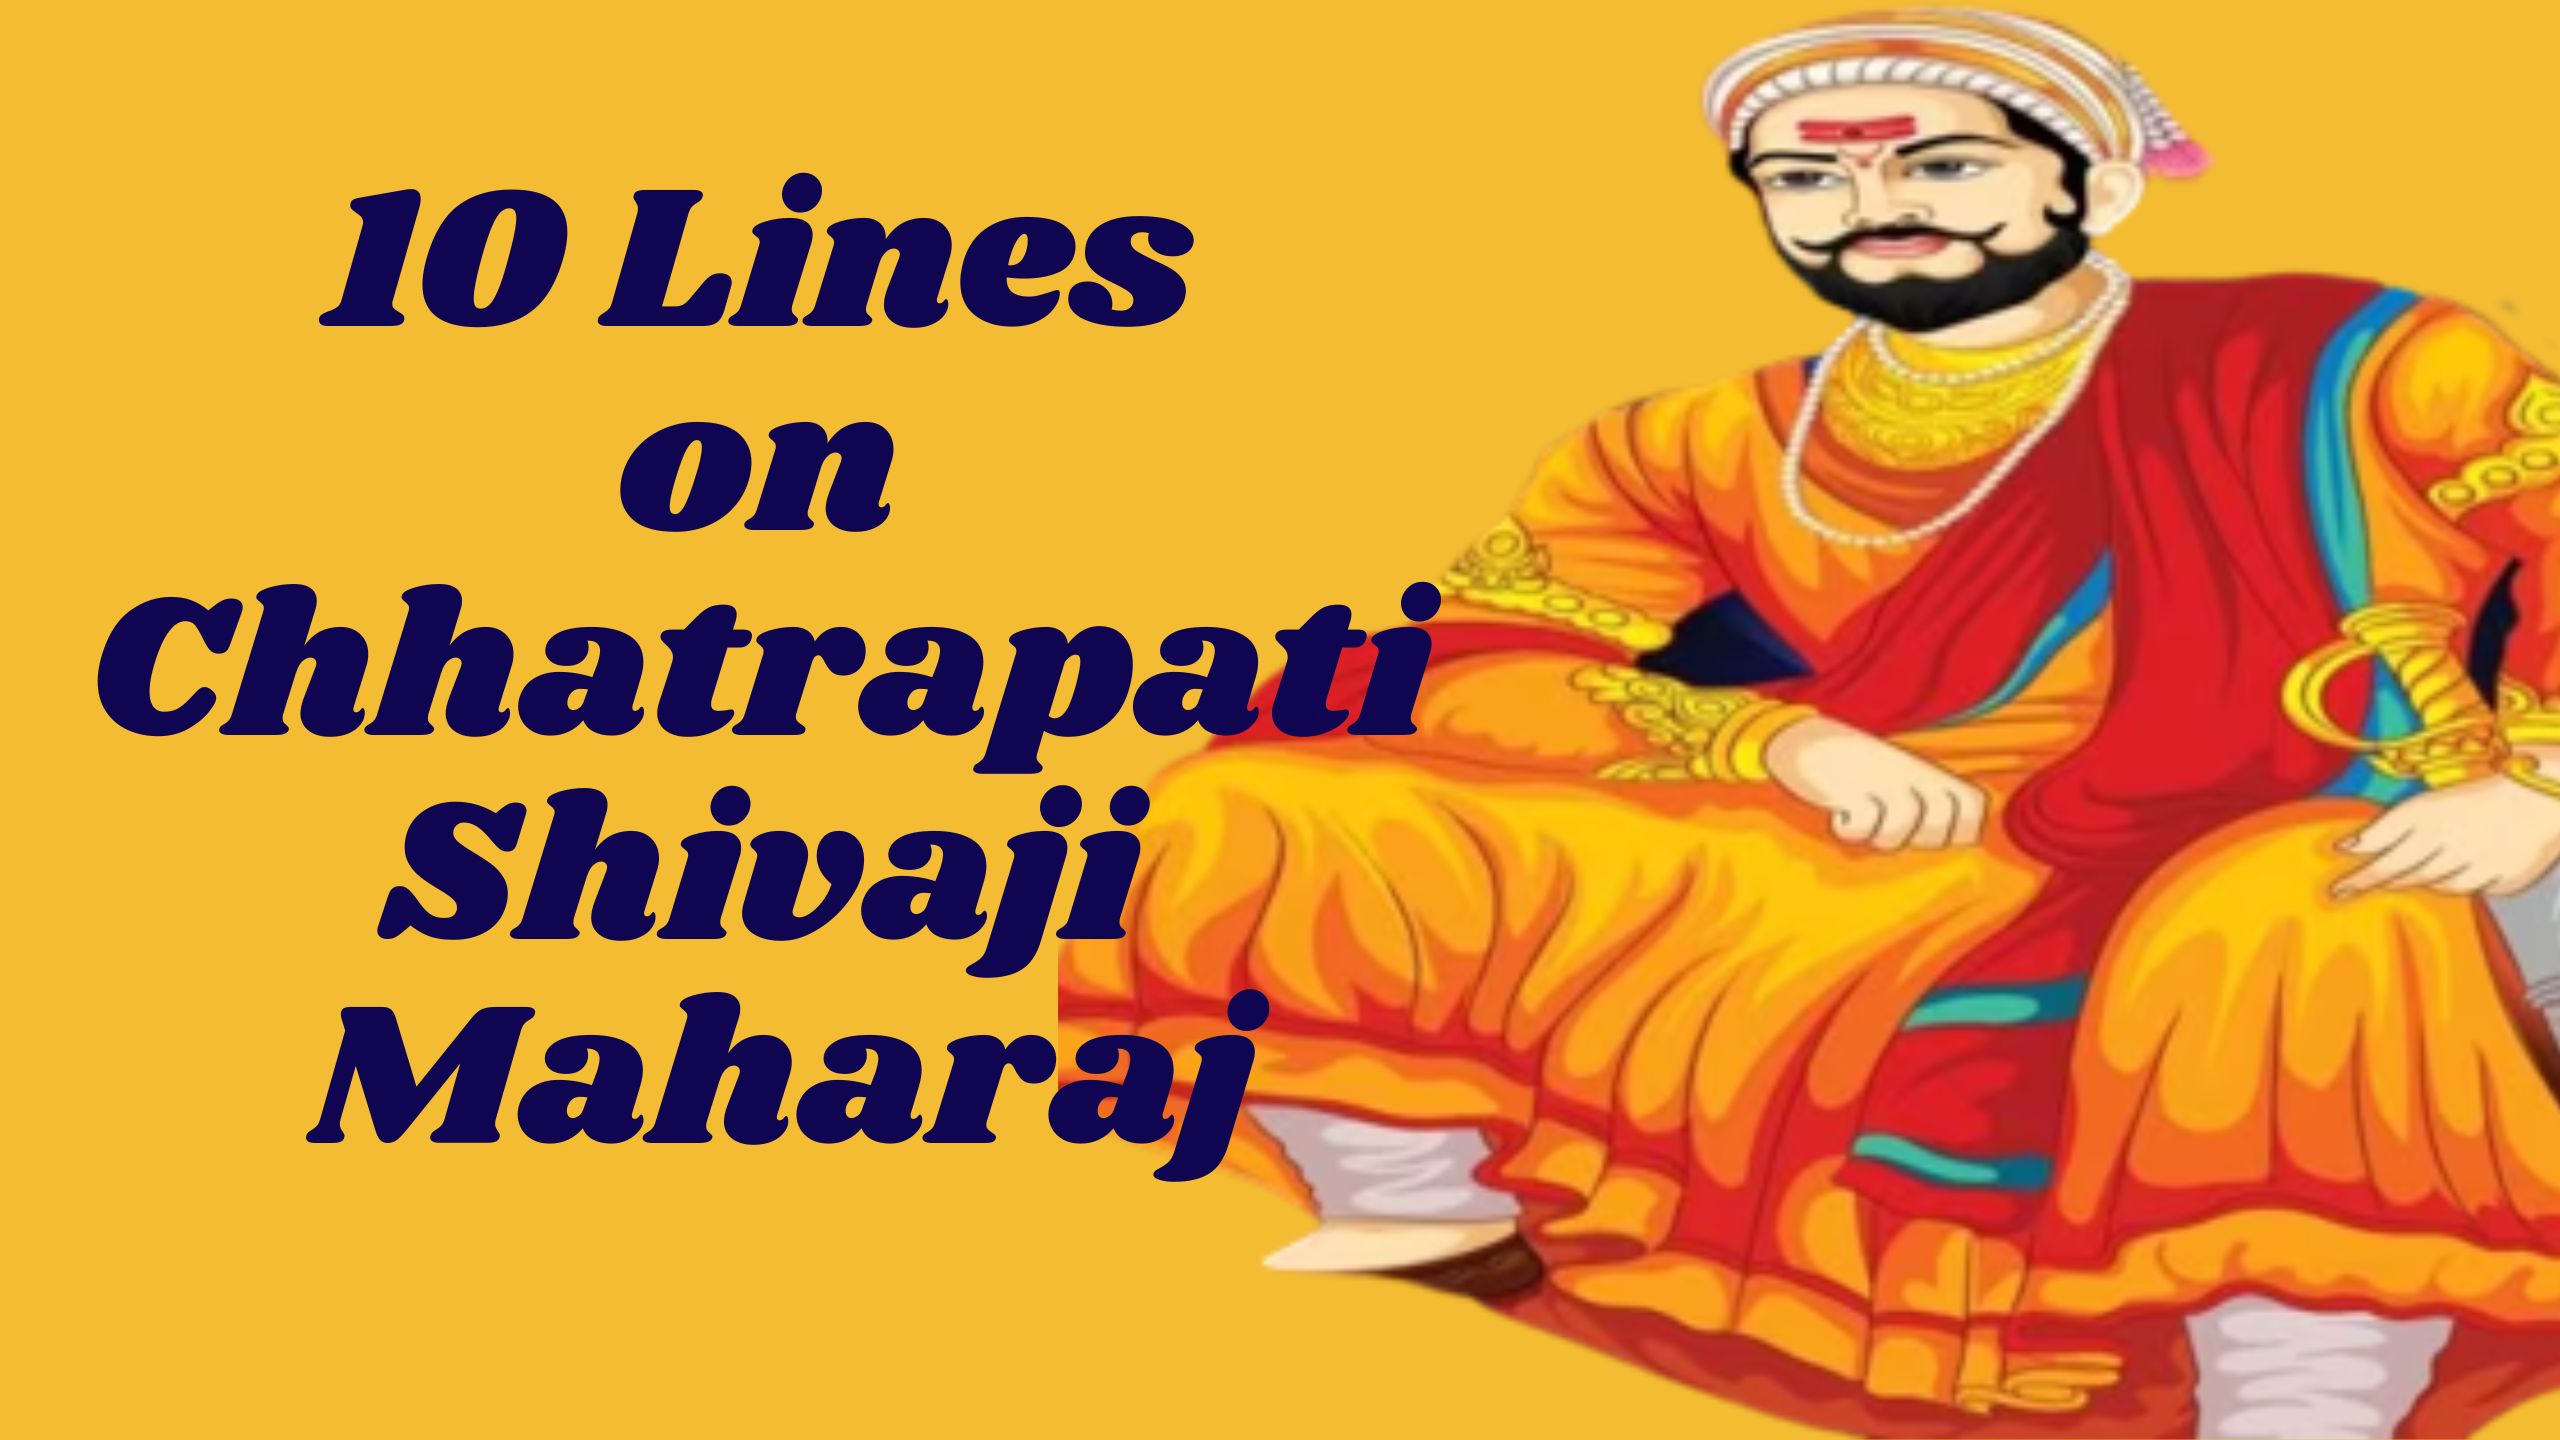 10 Lines on Chhatrapati Shivaji Maharaj